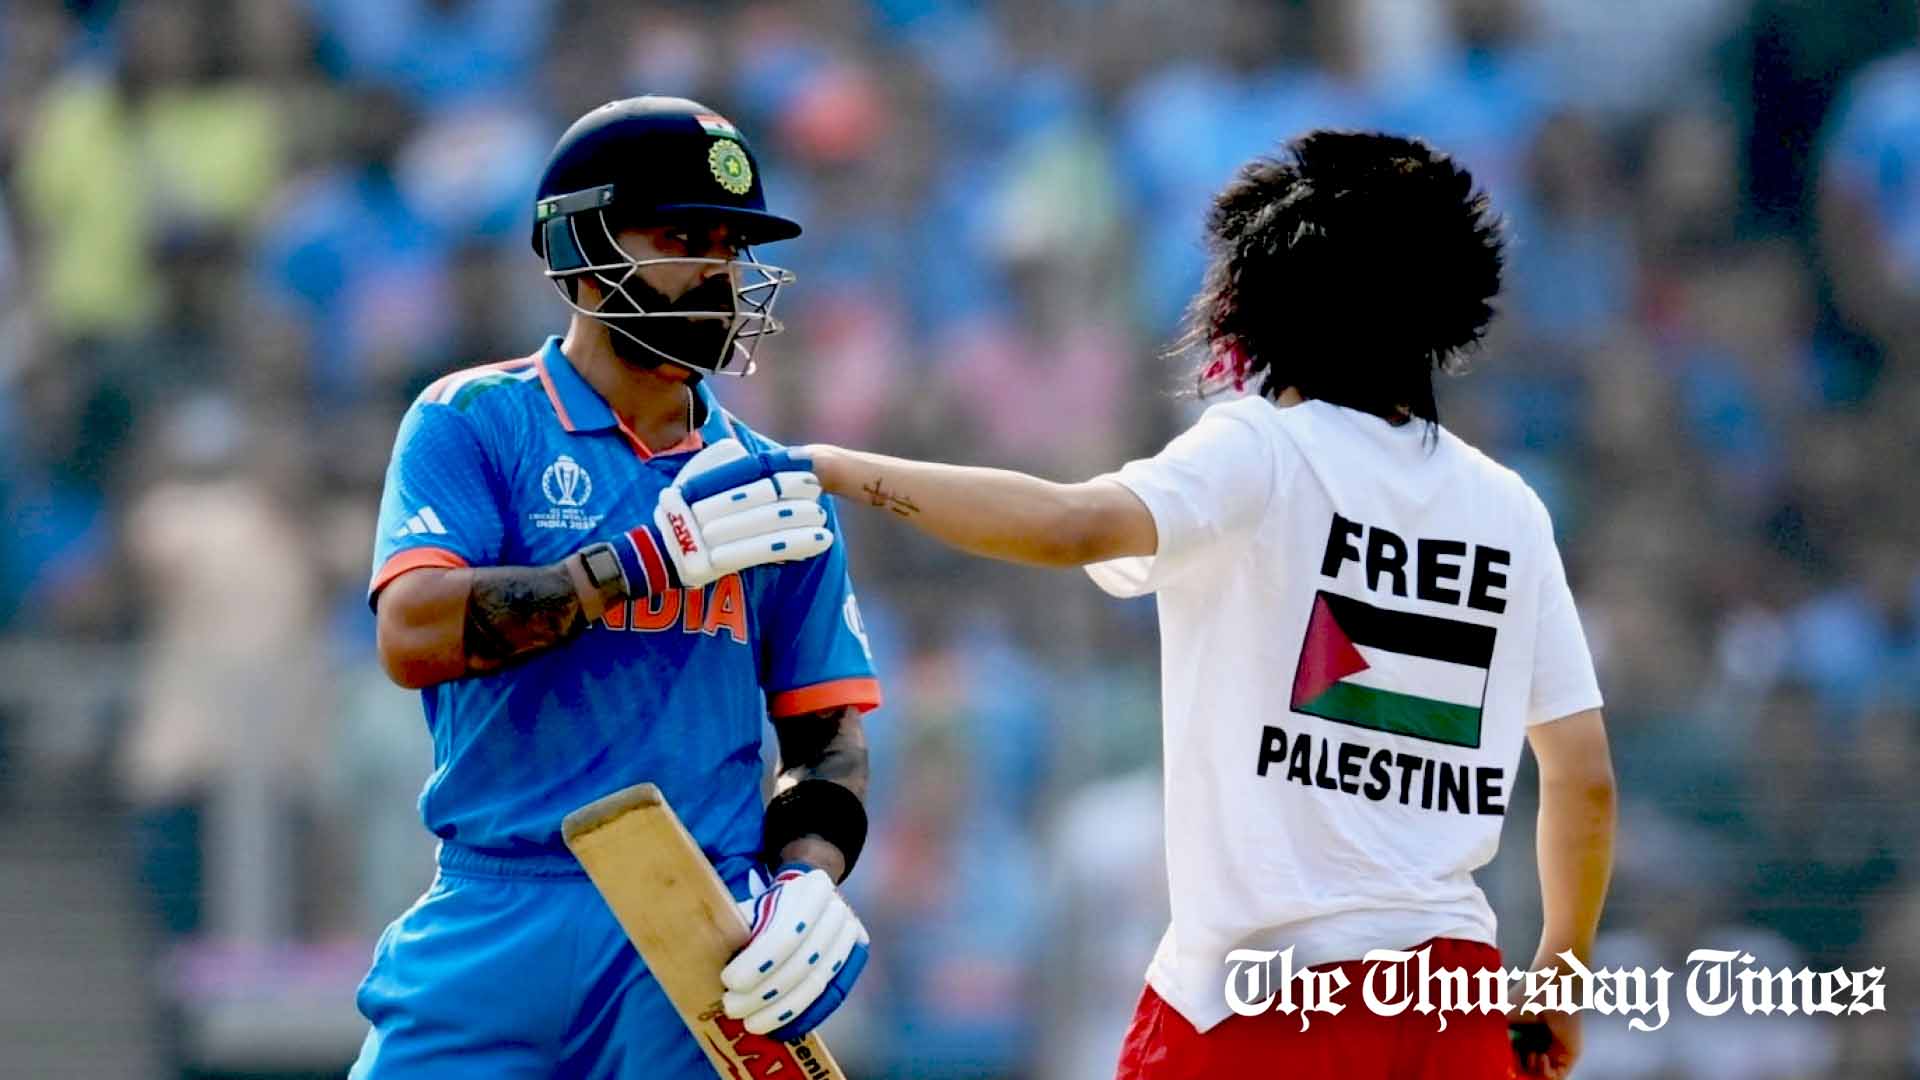 A protestor makes their way towards Virat Kohli during the Men's Cricket World Cup India 2023 Final between India and Australia at Narendra Modi Stadium in Ahmedabad on November 19, 2023. — GARETH COPLEY